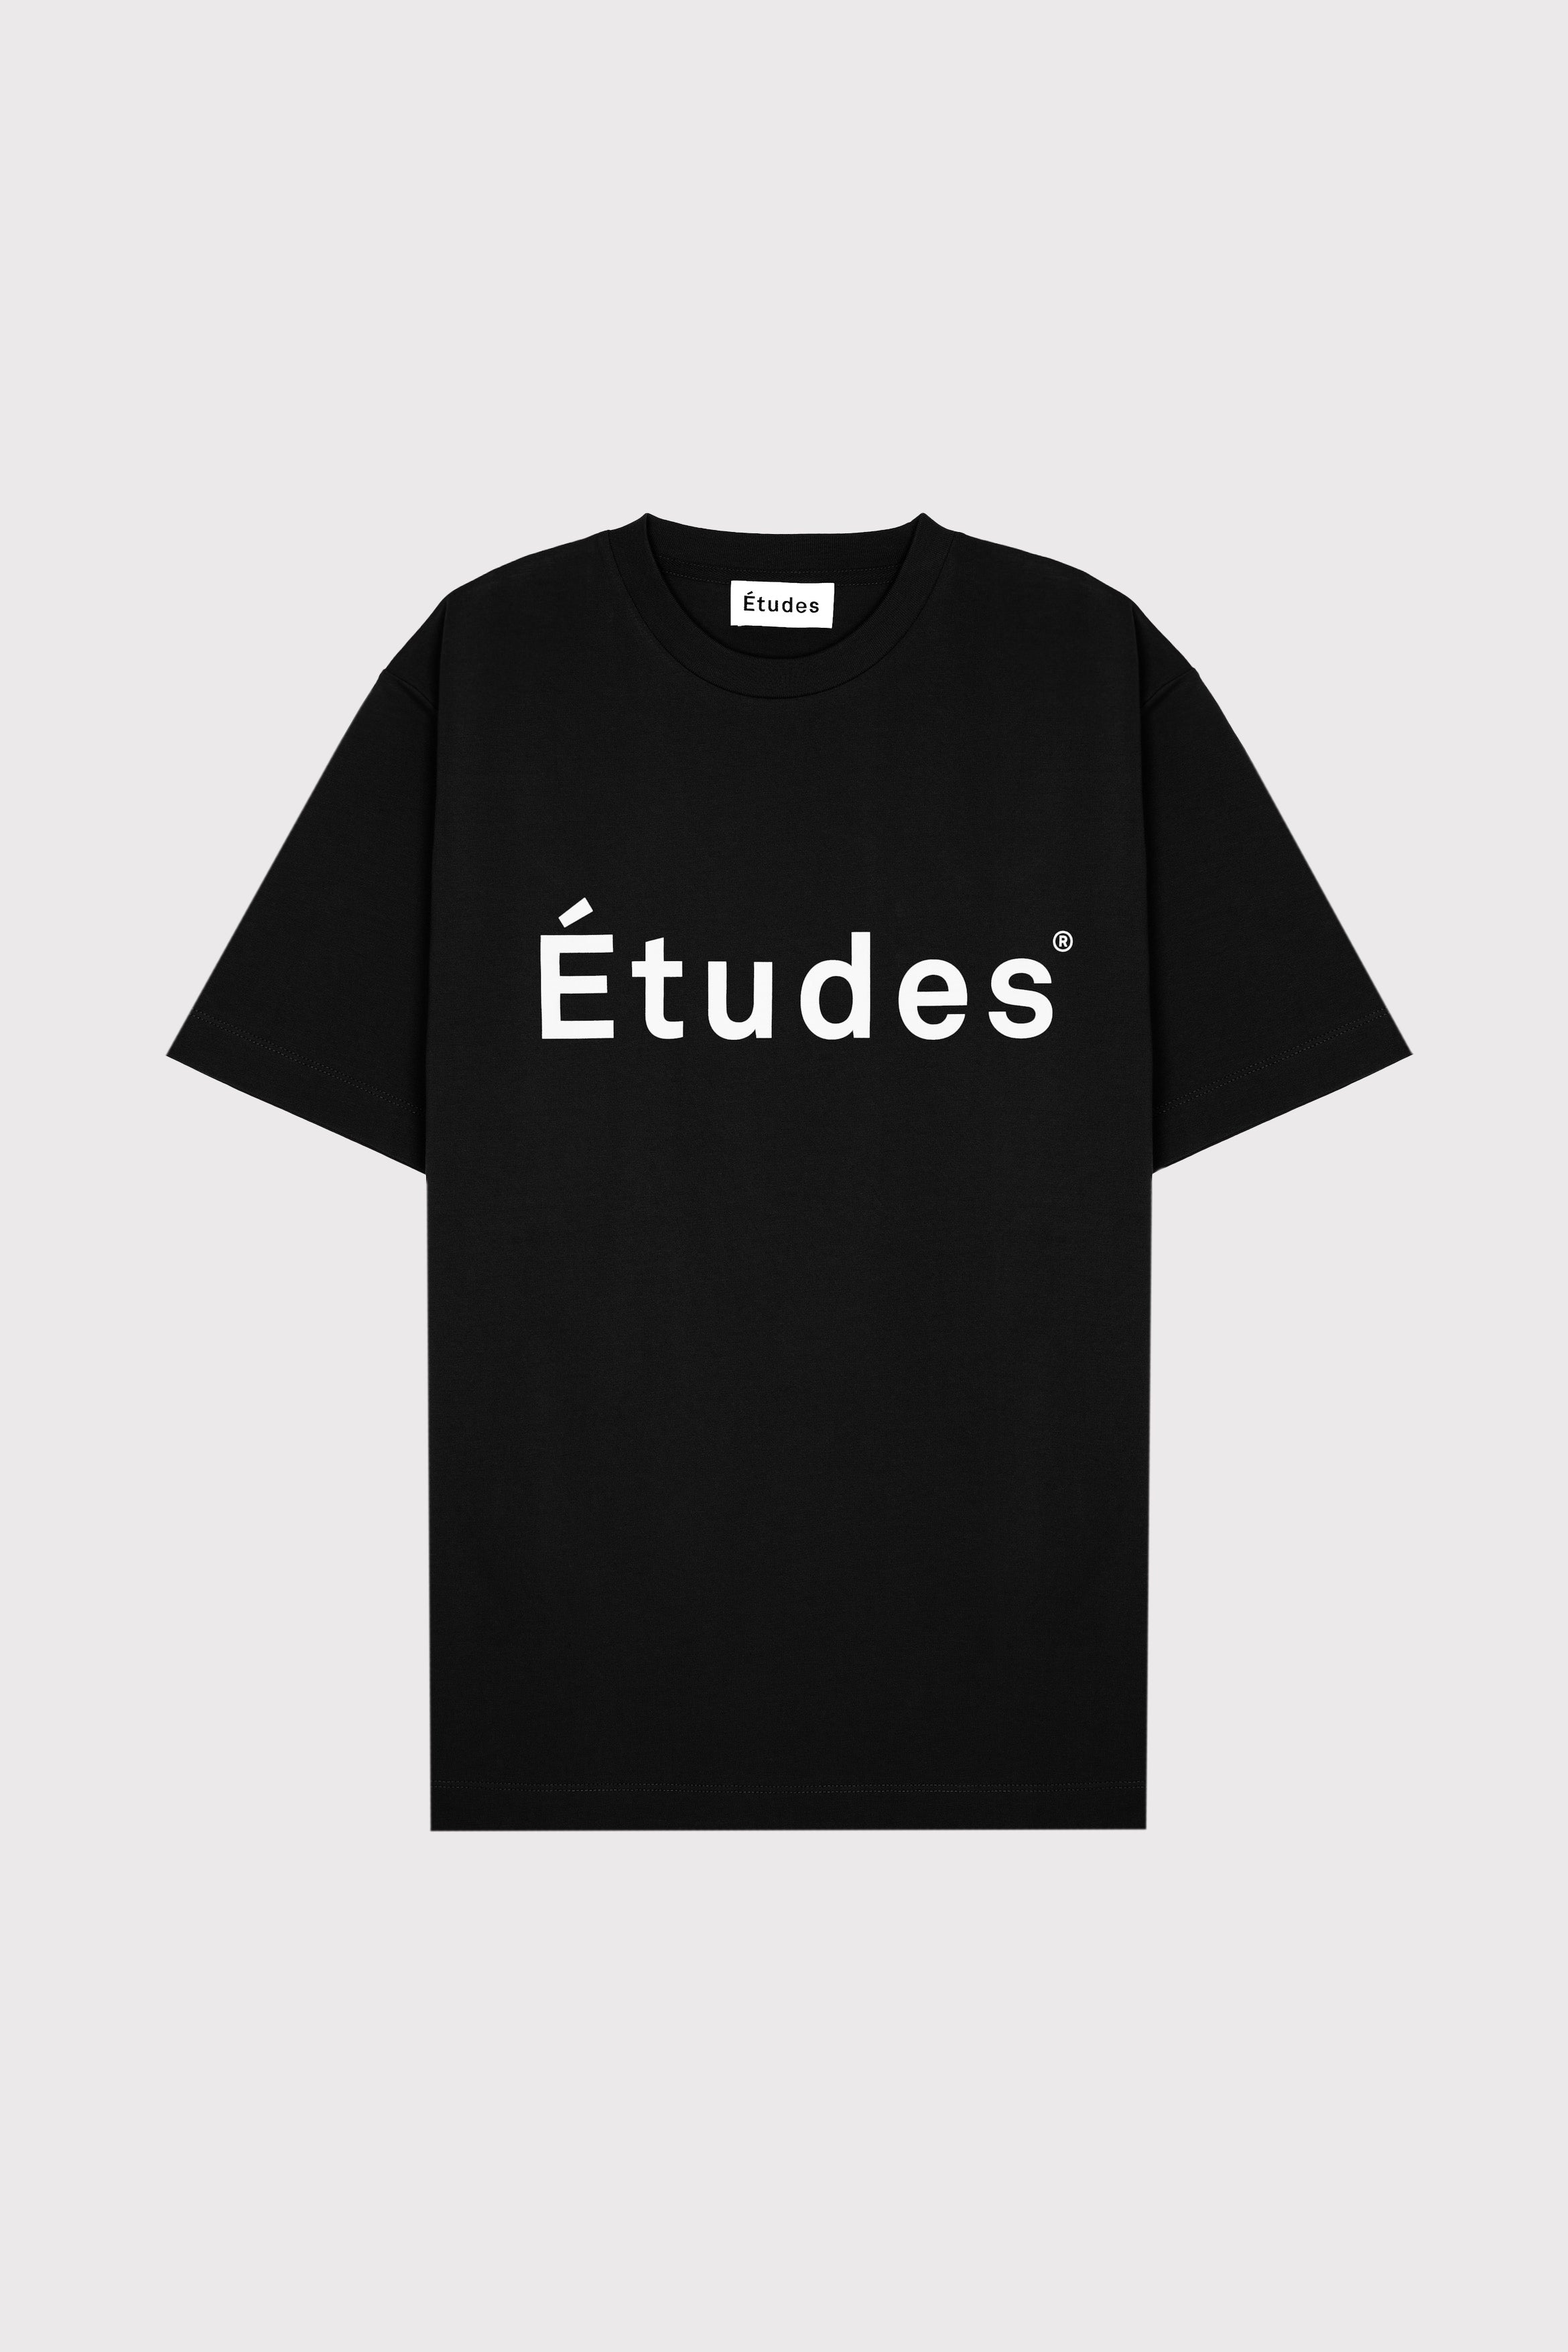 Études WONDER ETUDES BLACK T-shirt 2